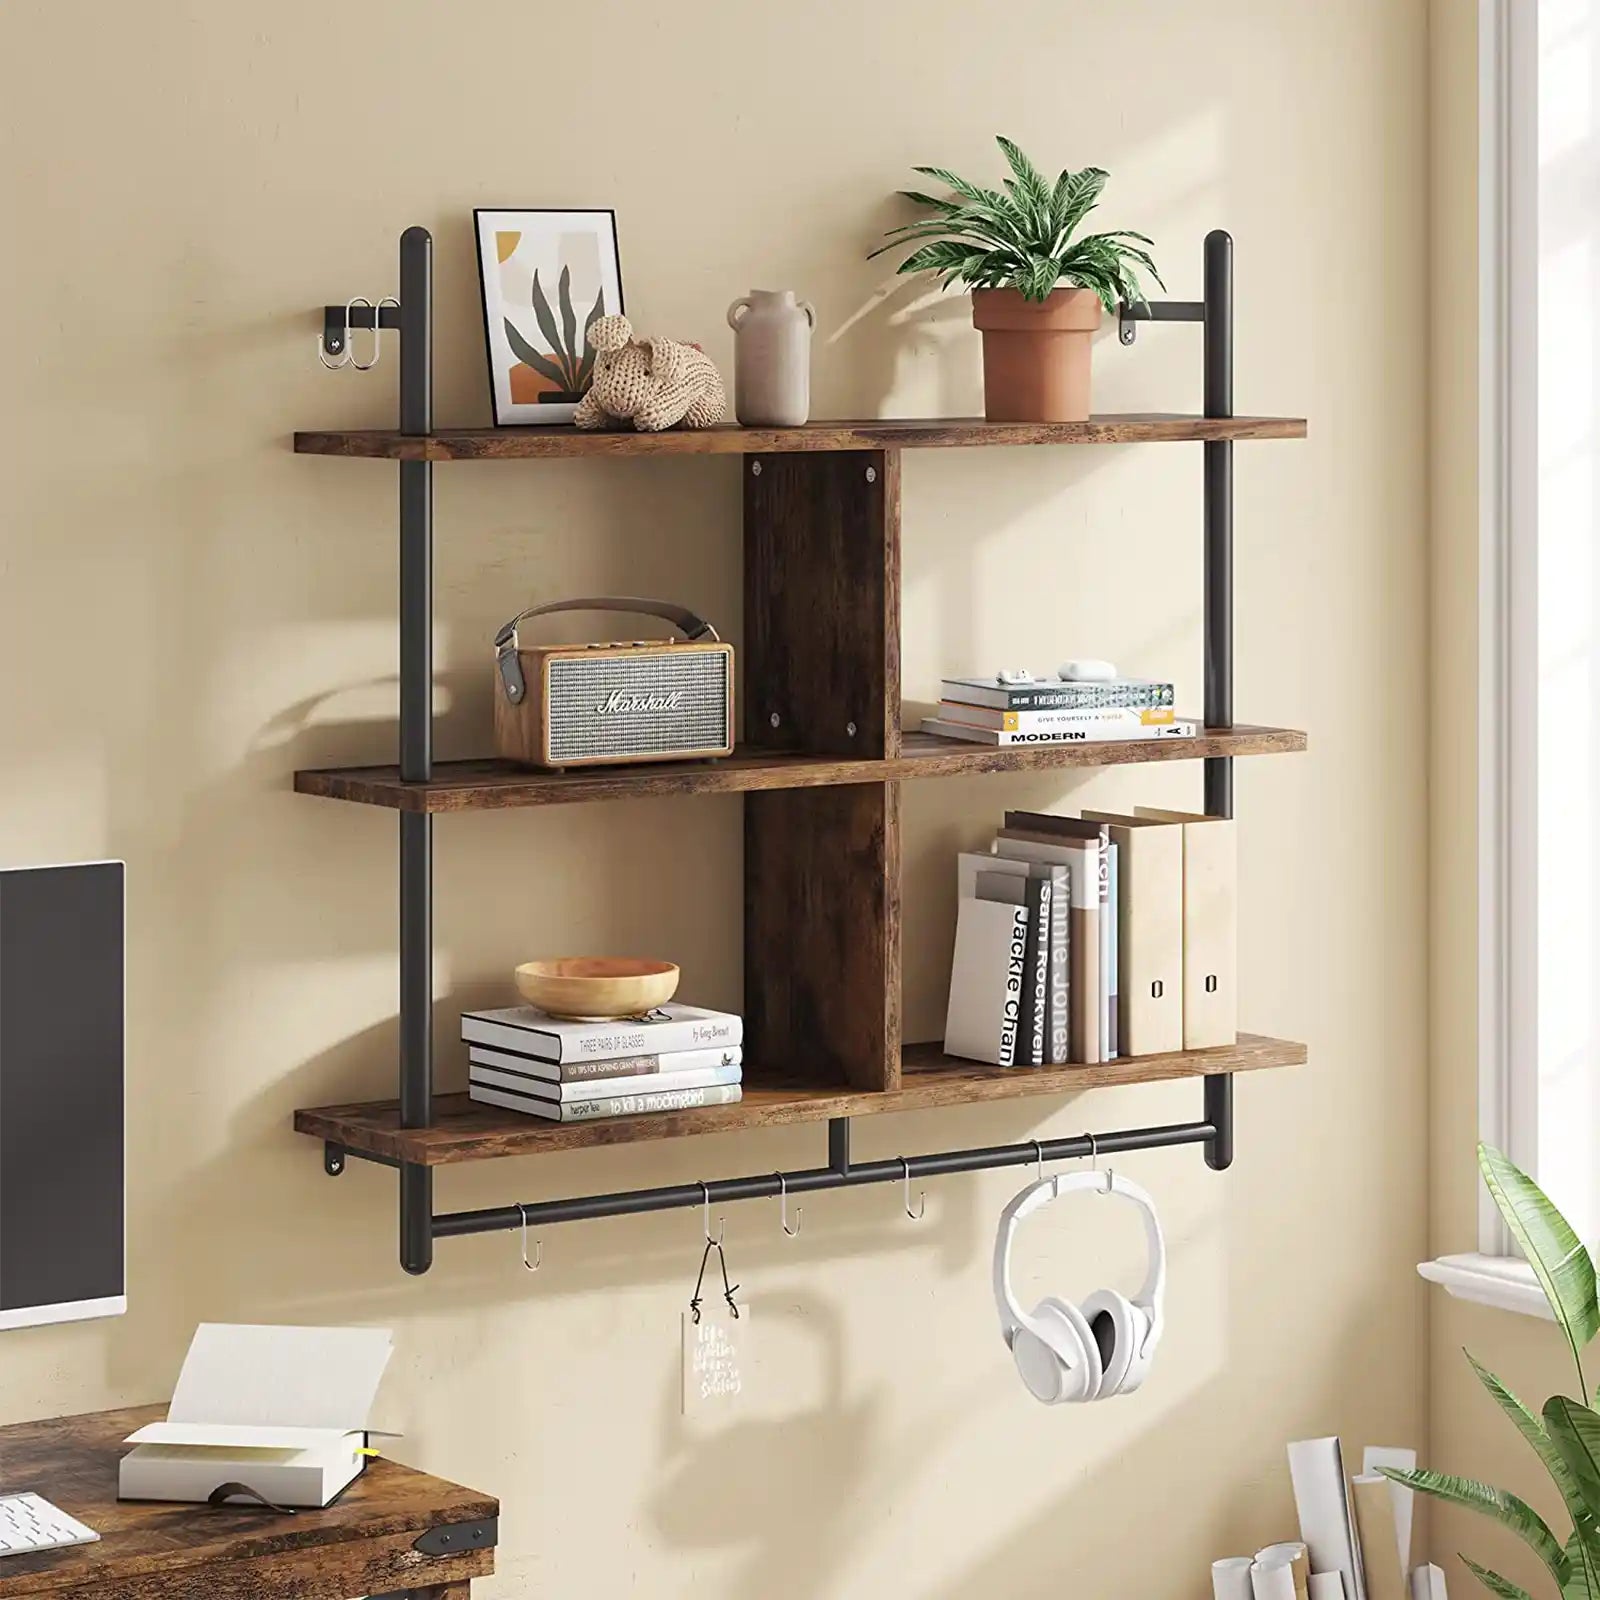 Floating Pipe Shelving, 3 Tier Industrial Wall-Mounted Ladder Shelf Hanging, Wood Display Bookshelf Storage for Living Room, Kitchen